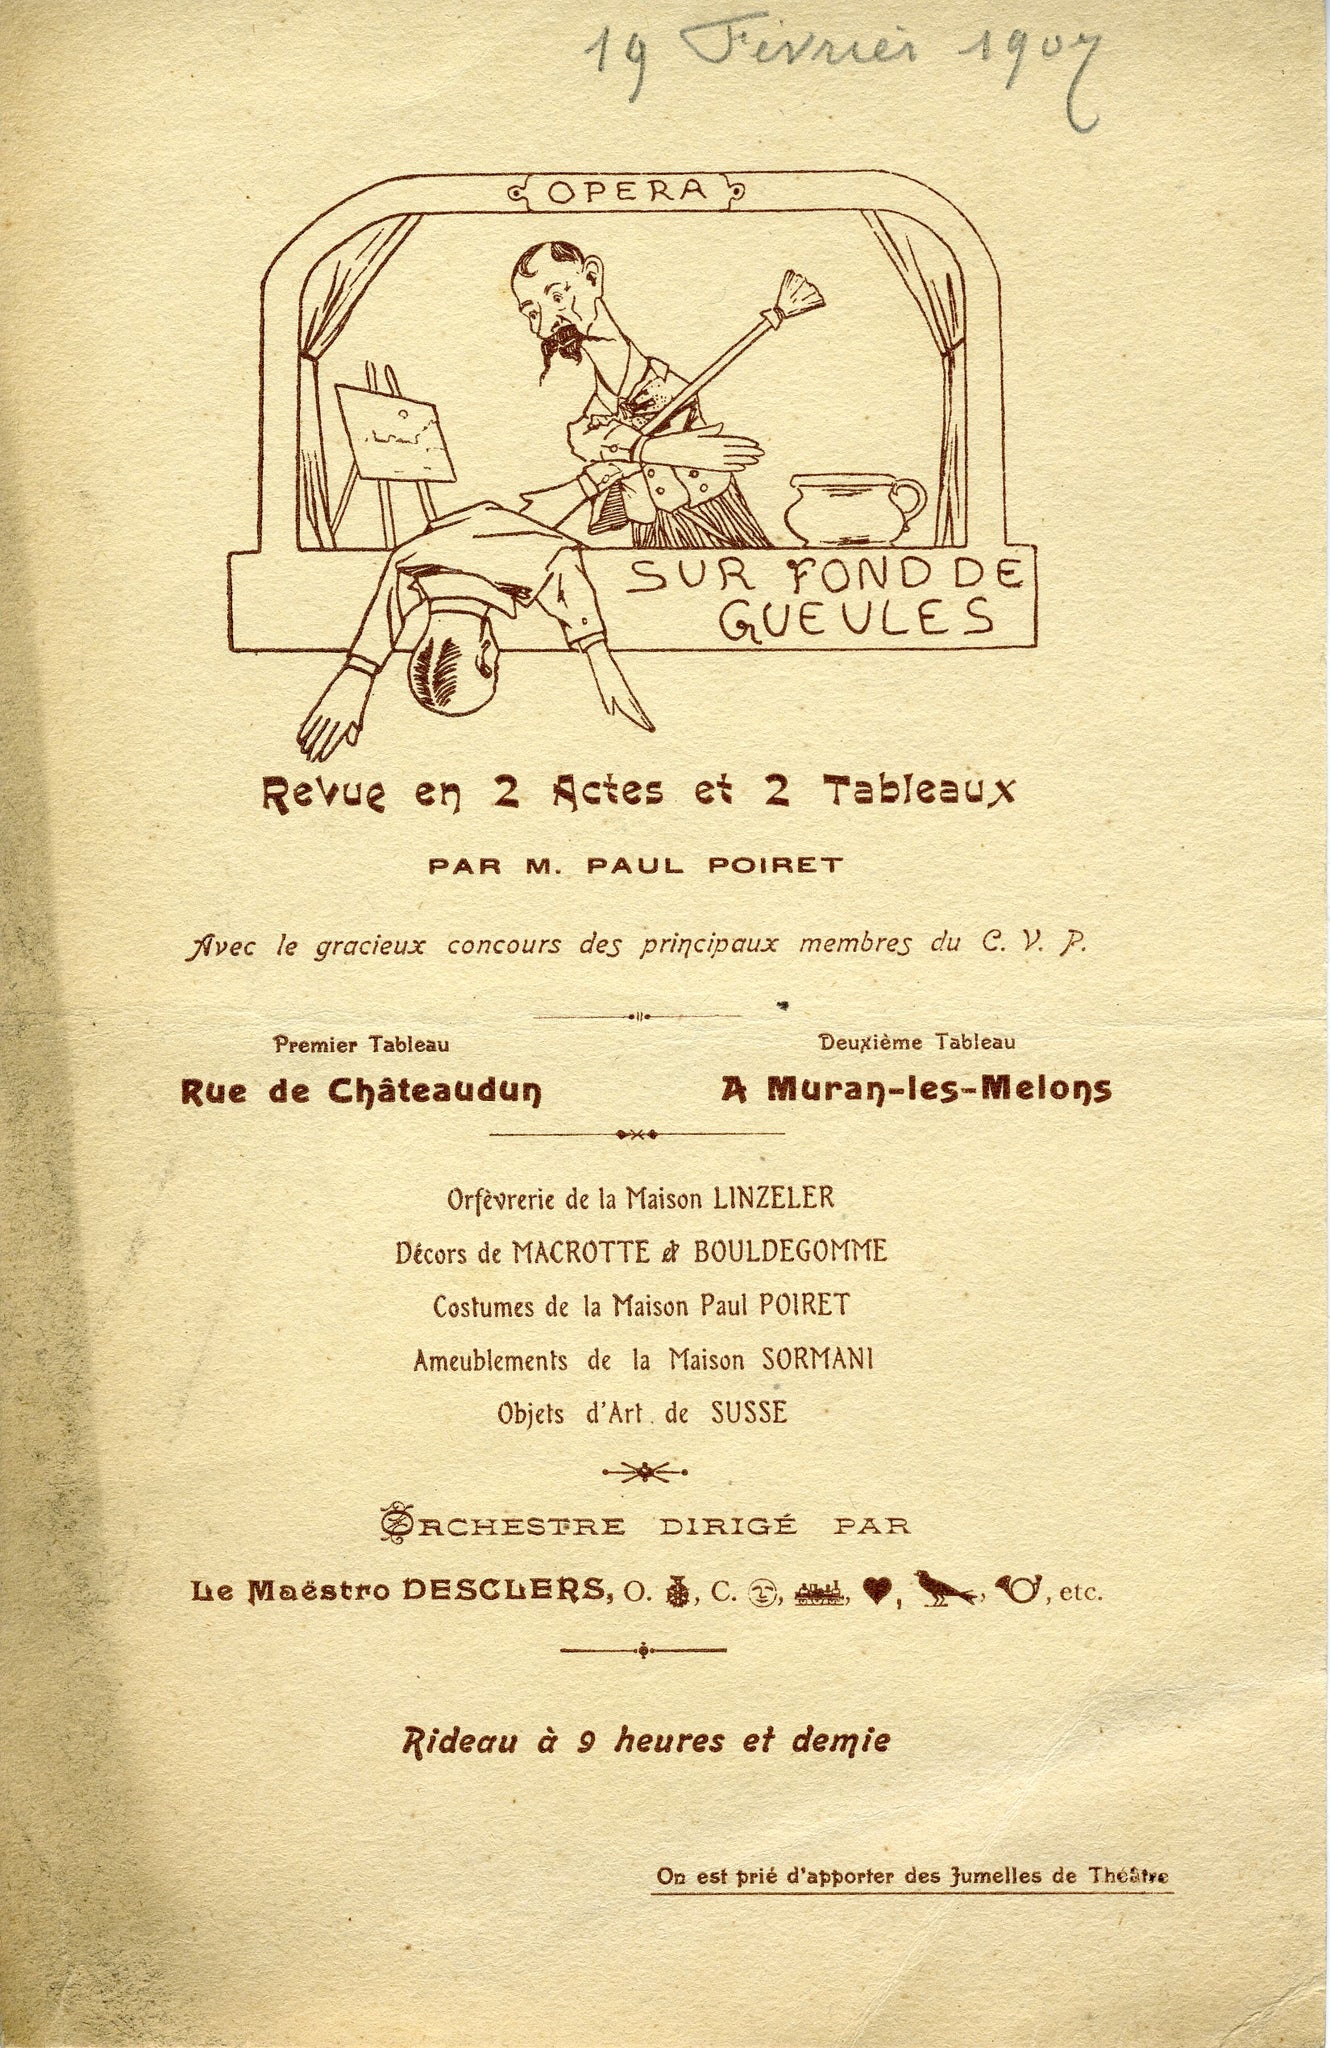 Poiret, Paul. (1879 - 1944) Revue "Sur Fond de Gueles" - Invitation to an unrecorded opera revue, 1907.